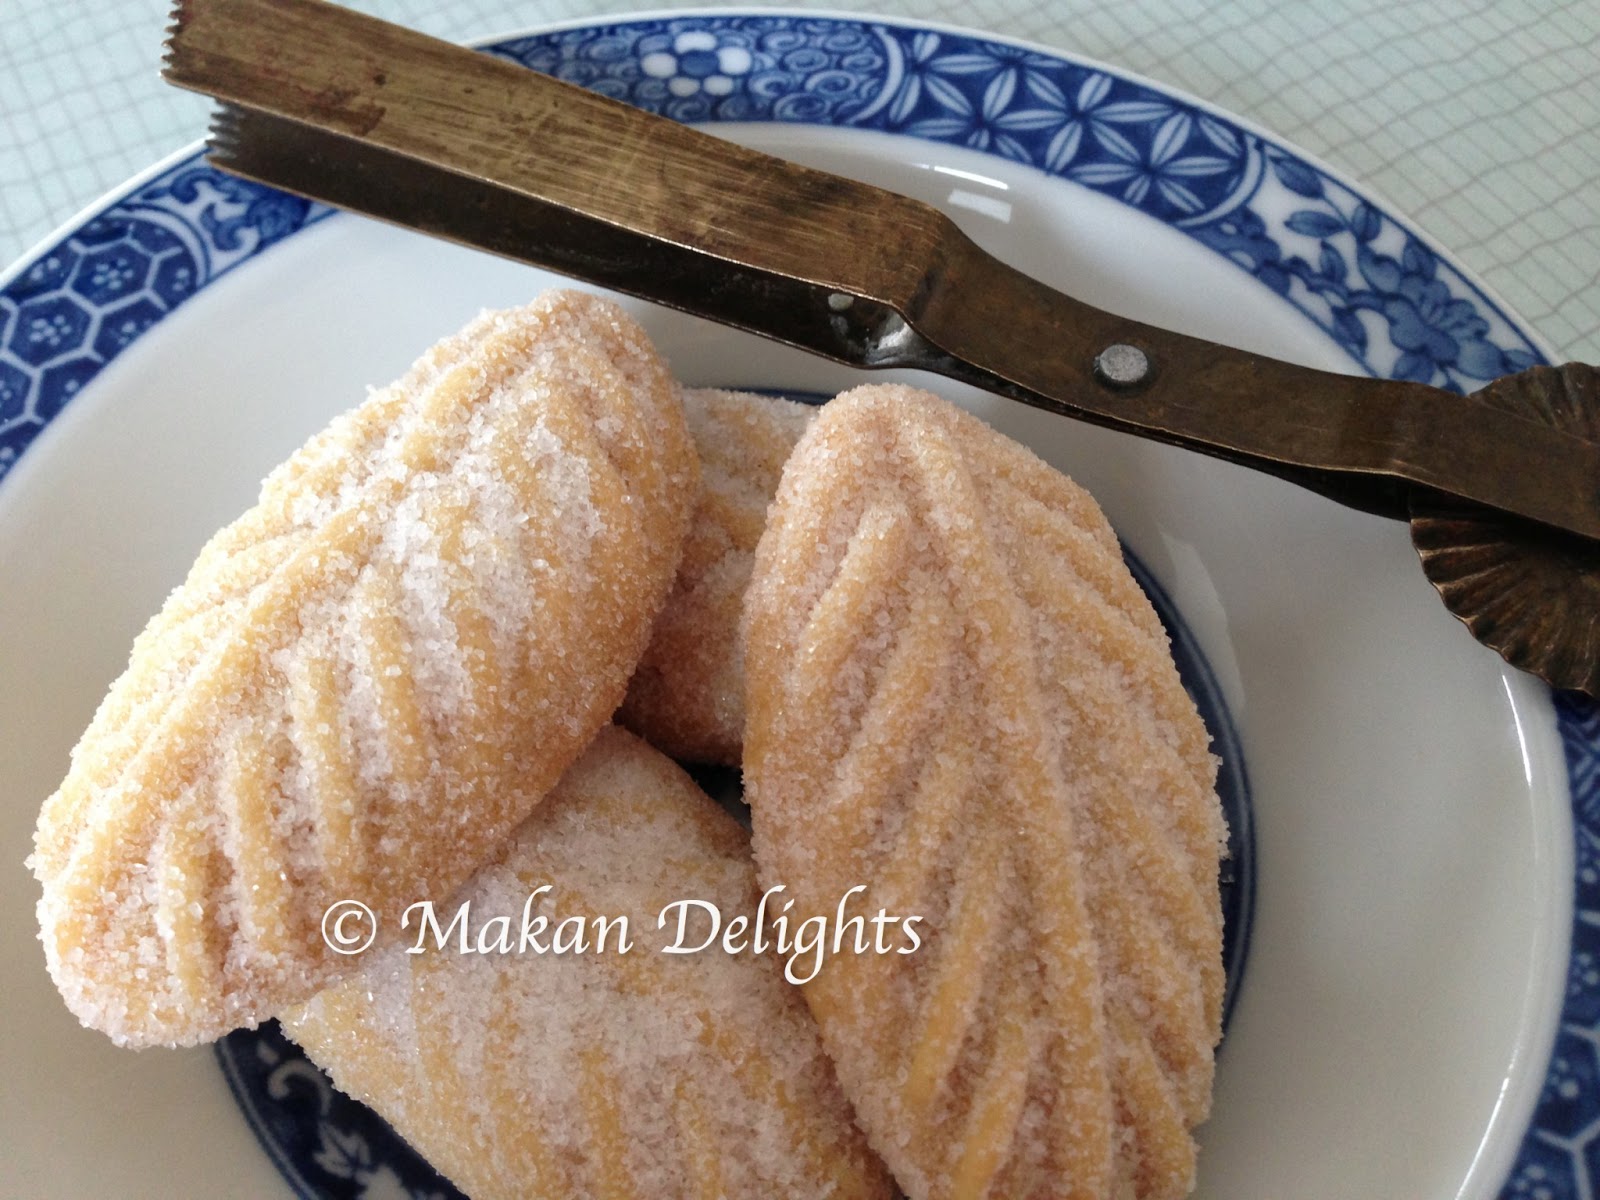 Makan Delights: Kuih Makmur